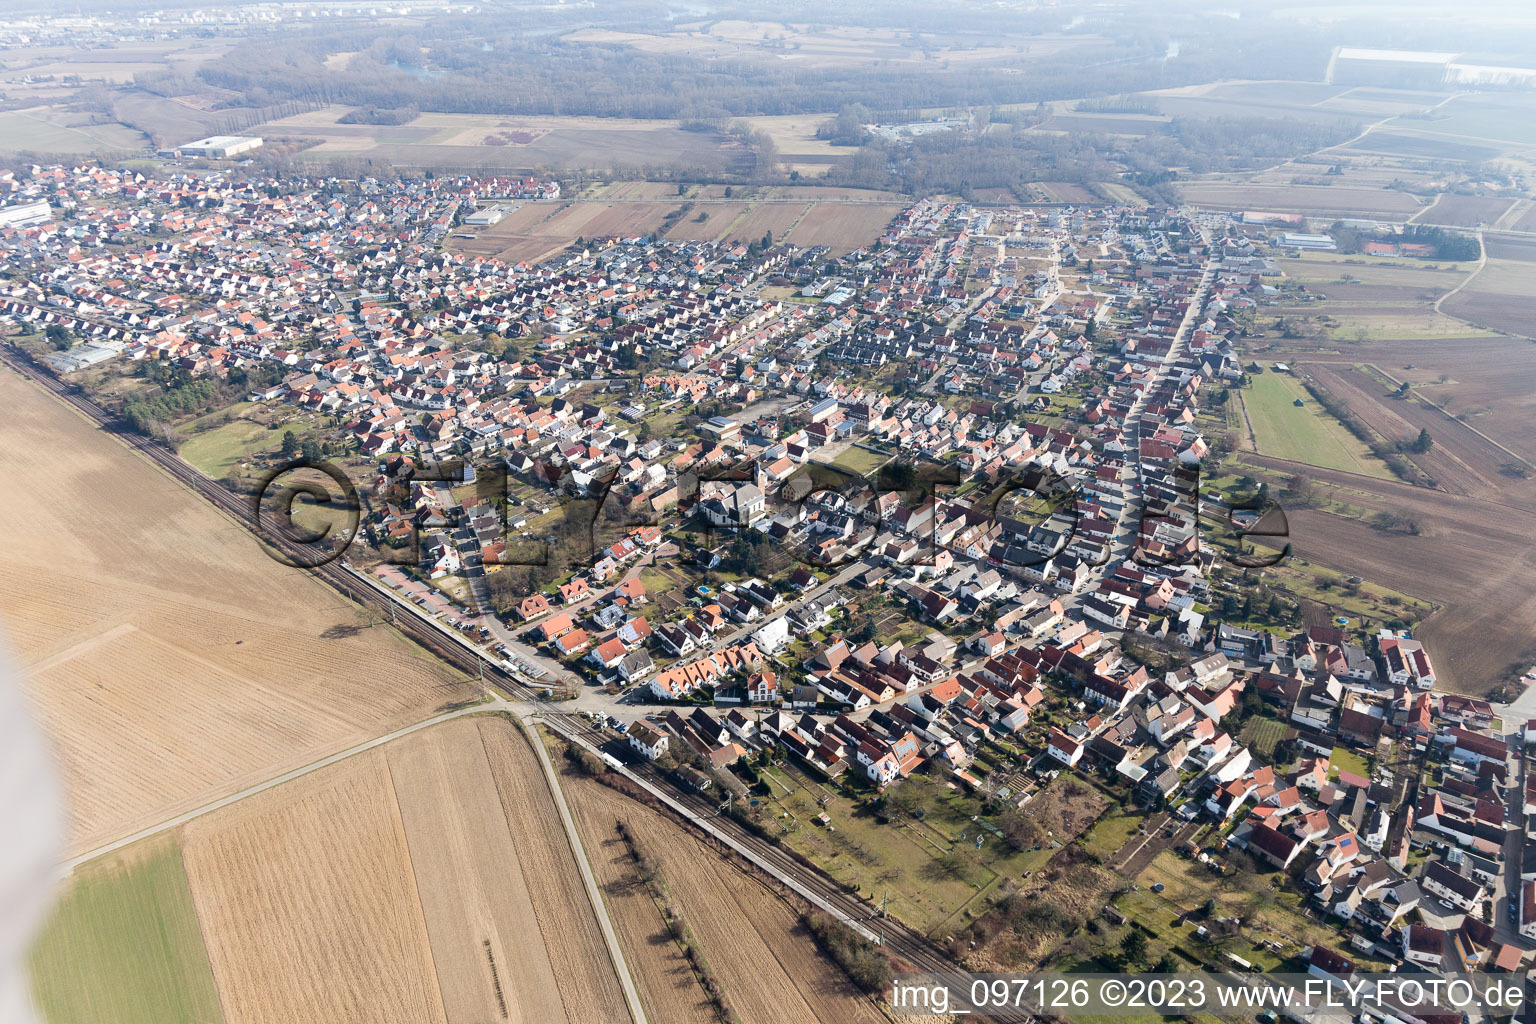 District Heiligenstein in Römerberg in the state Rhineland-Palatinate, Germany from above